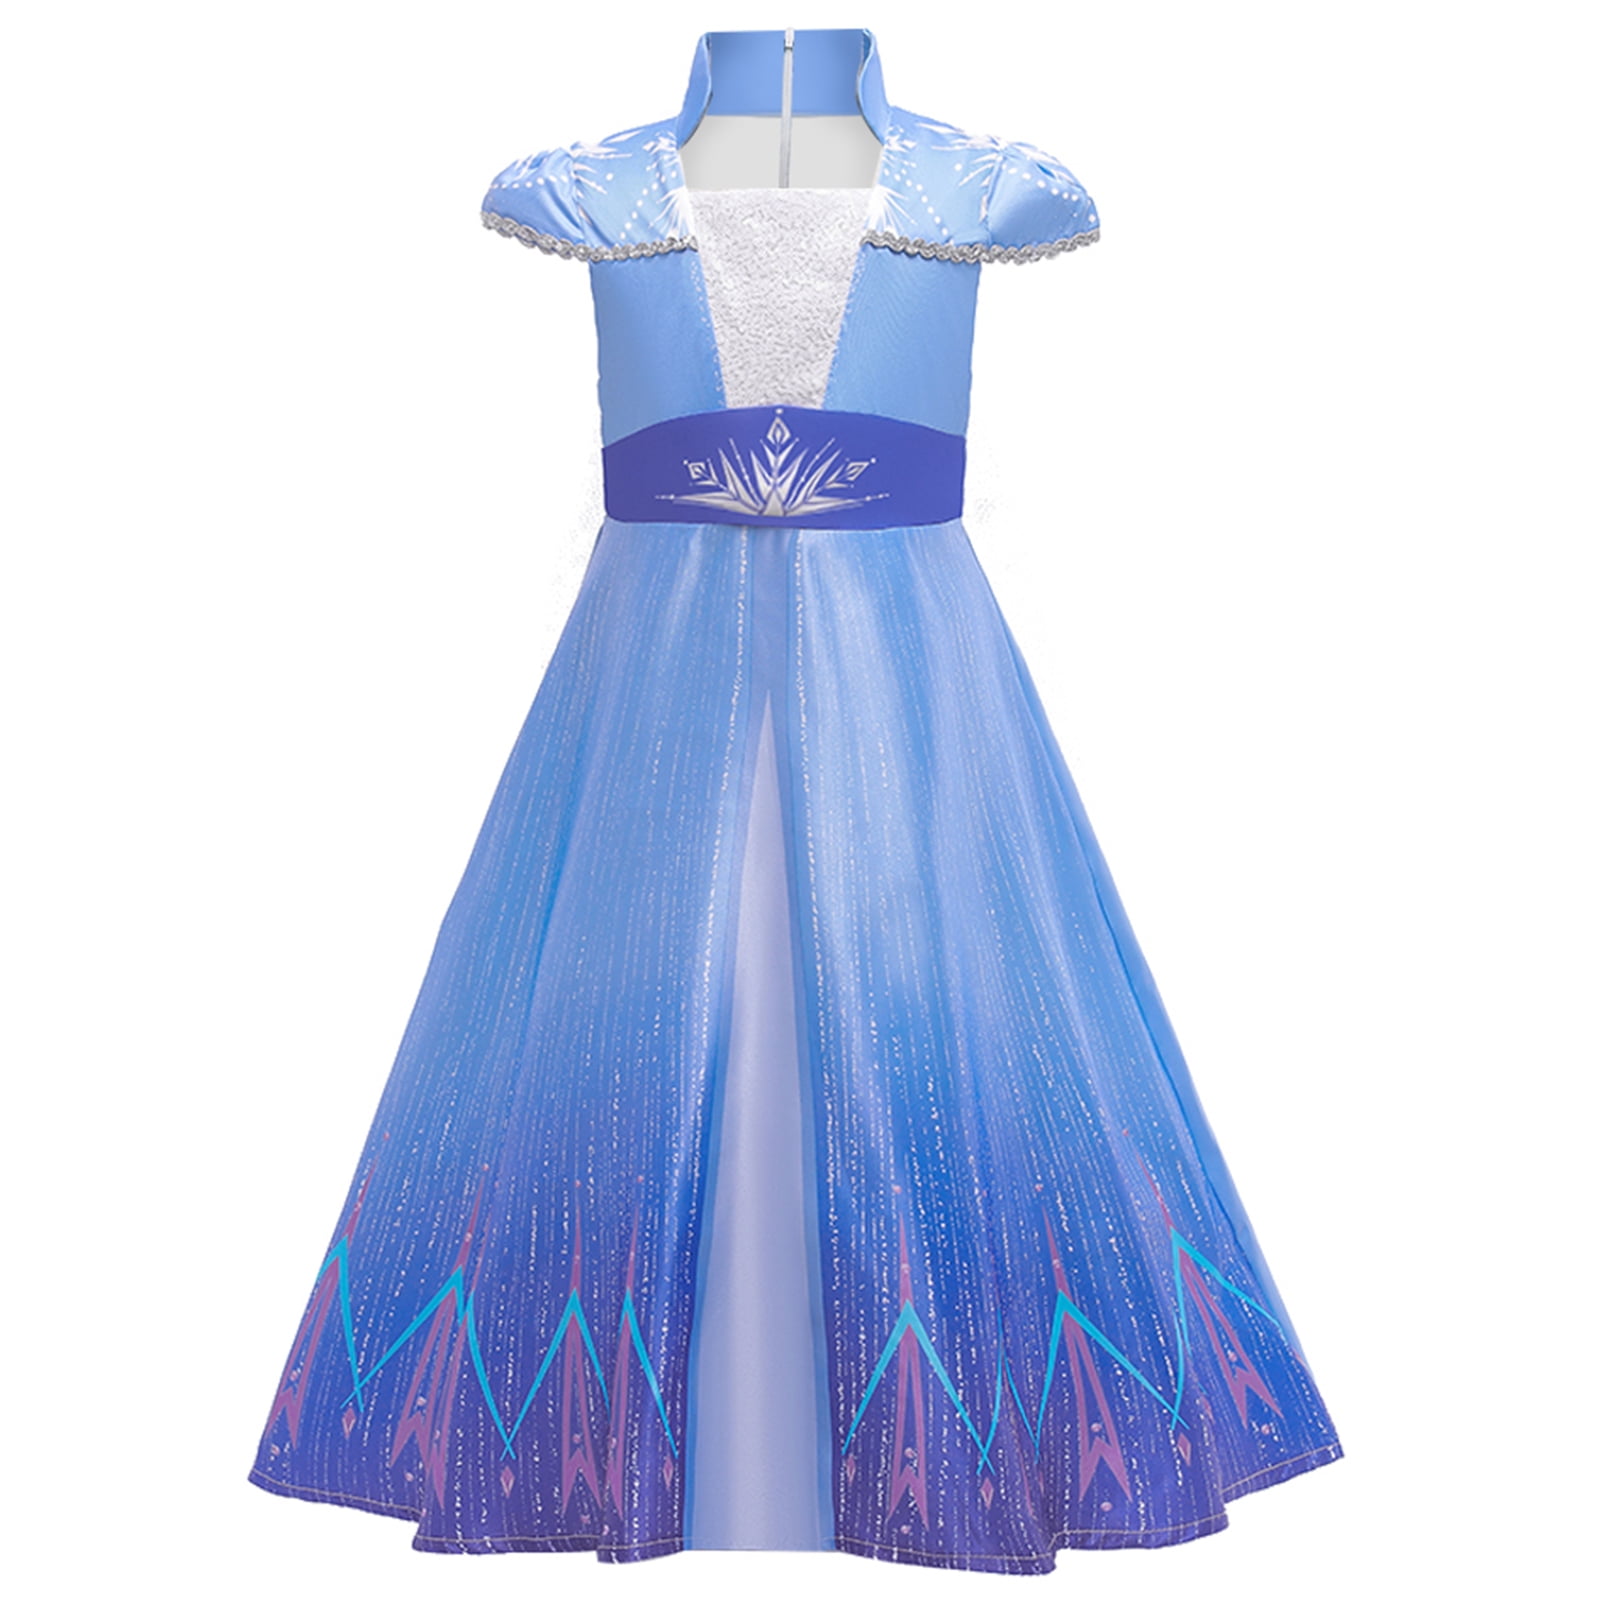 Kdi Girls Frozen Princess Anna Elsa Cosplay Costume Party Sundress Fancy Dress 